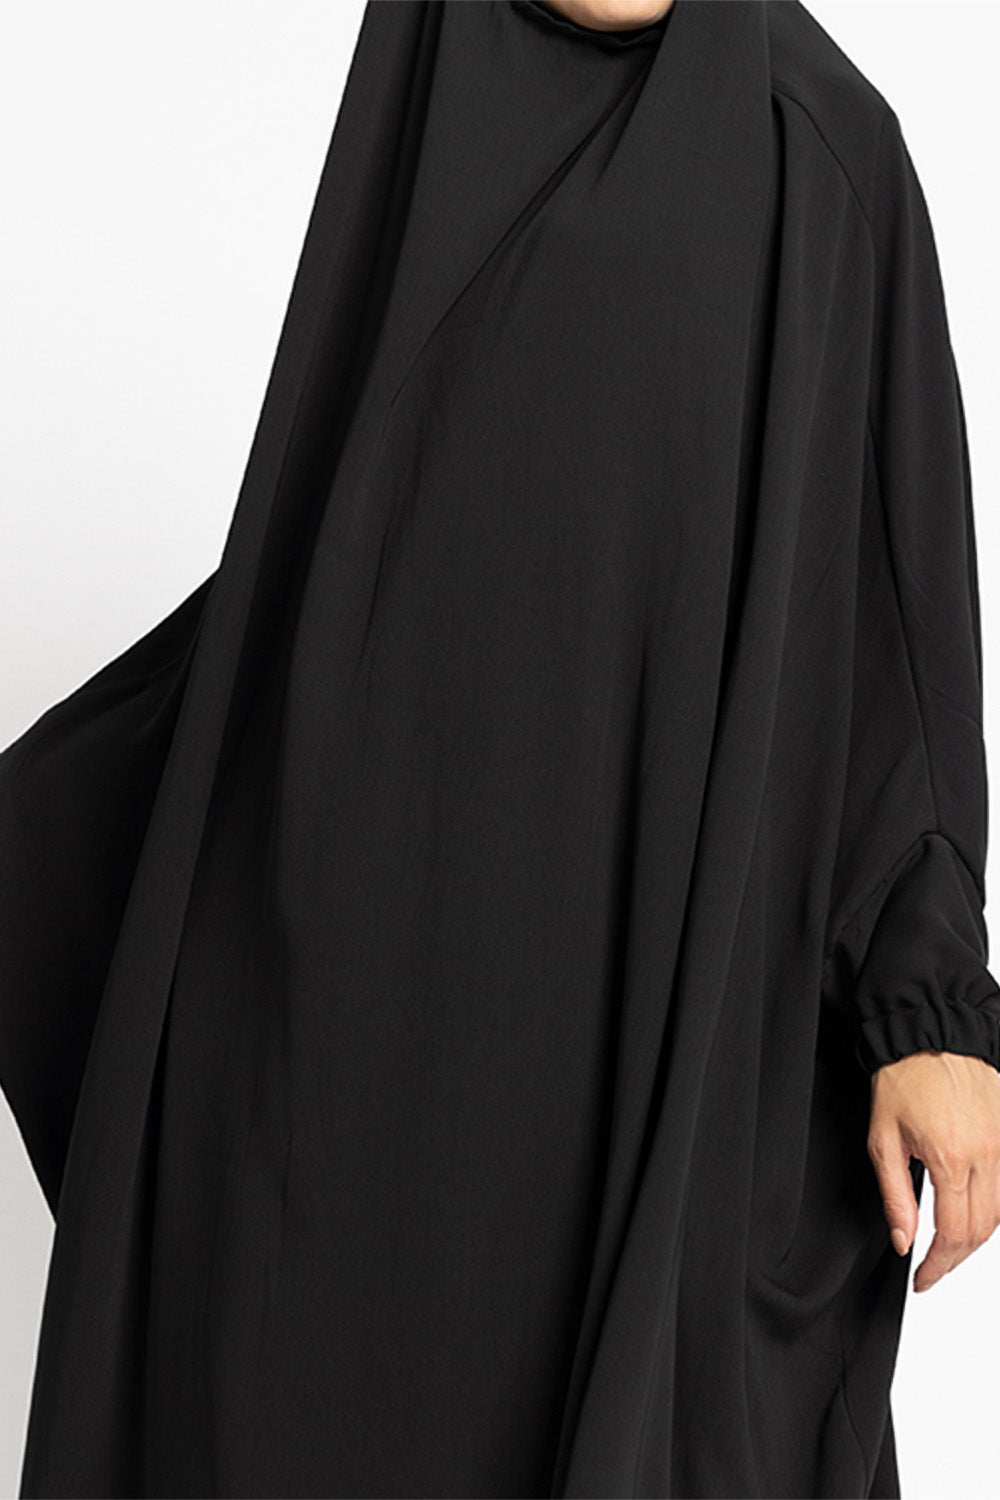 Black Two Piece Jilbab (Khimar) With Skirt-almanaar Islamic Store